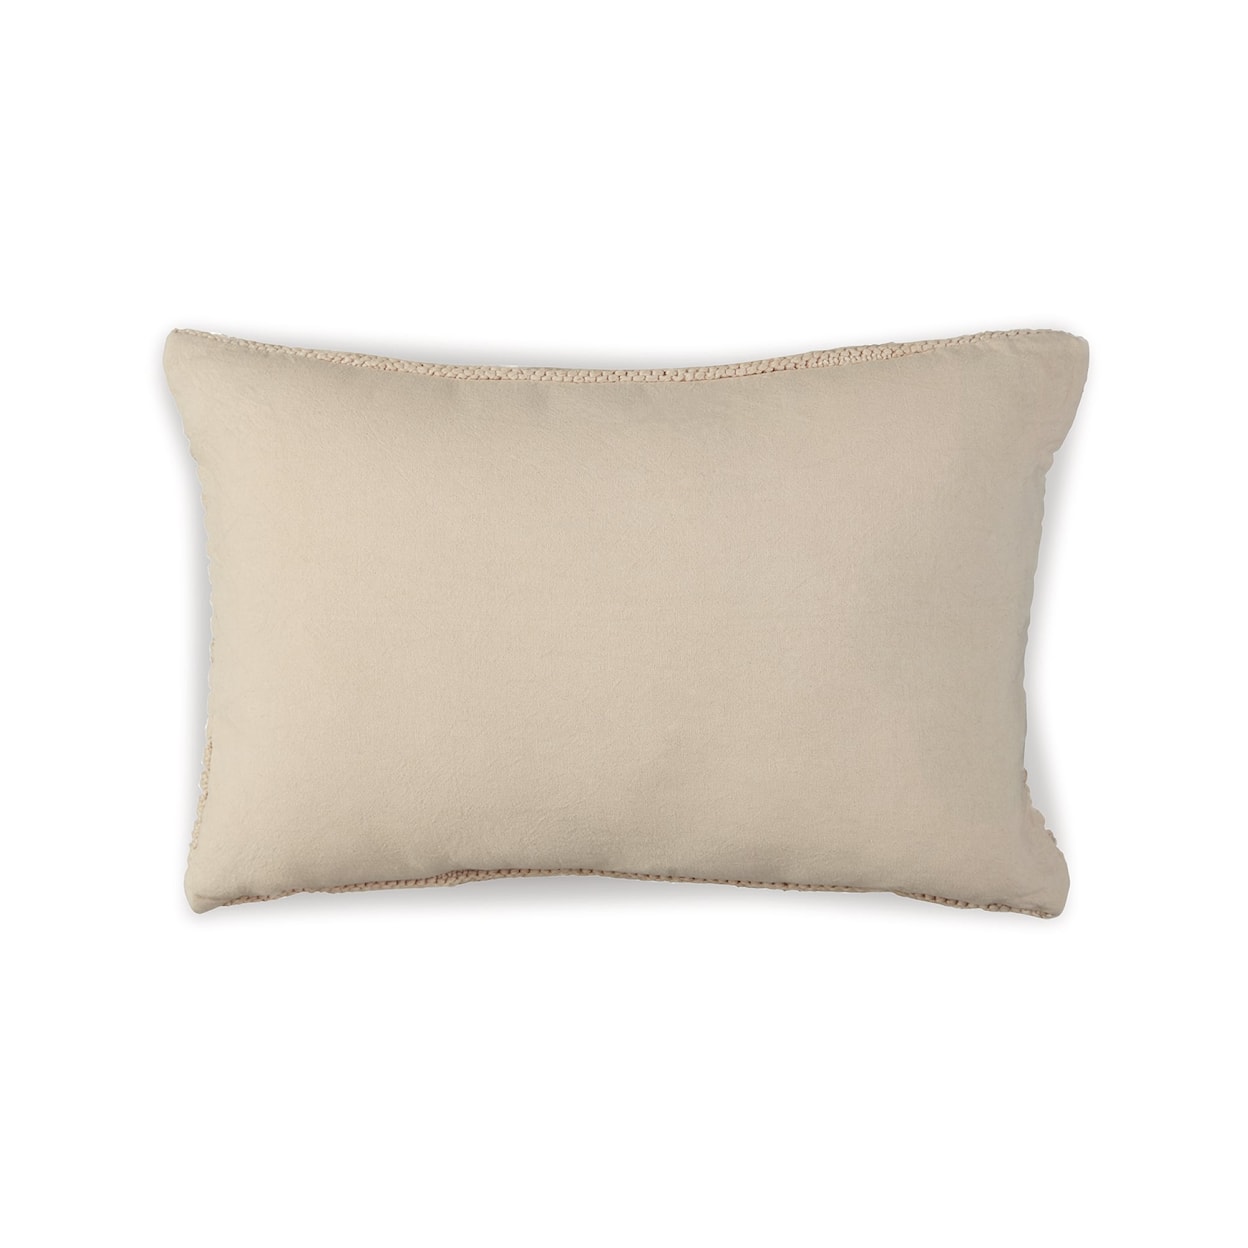 Ashley Furniture Signature Design Abreyah Pillow (Set of 4)